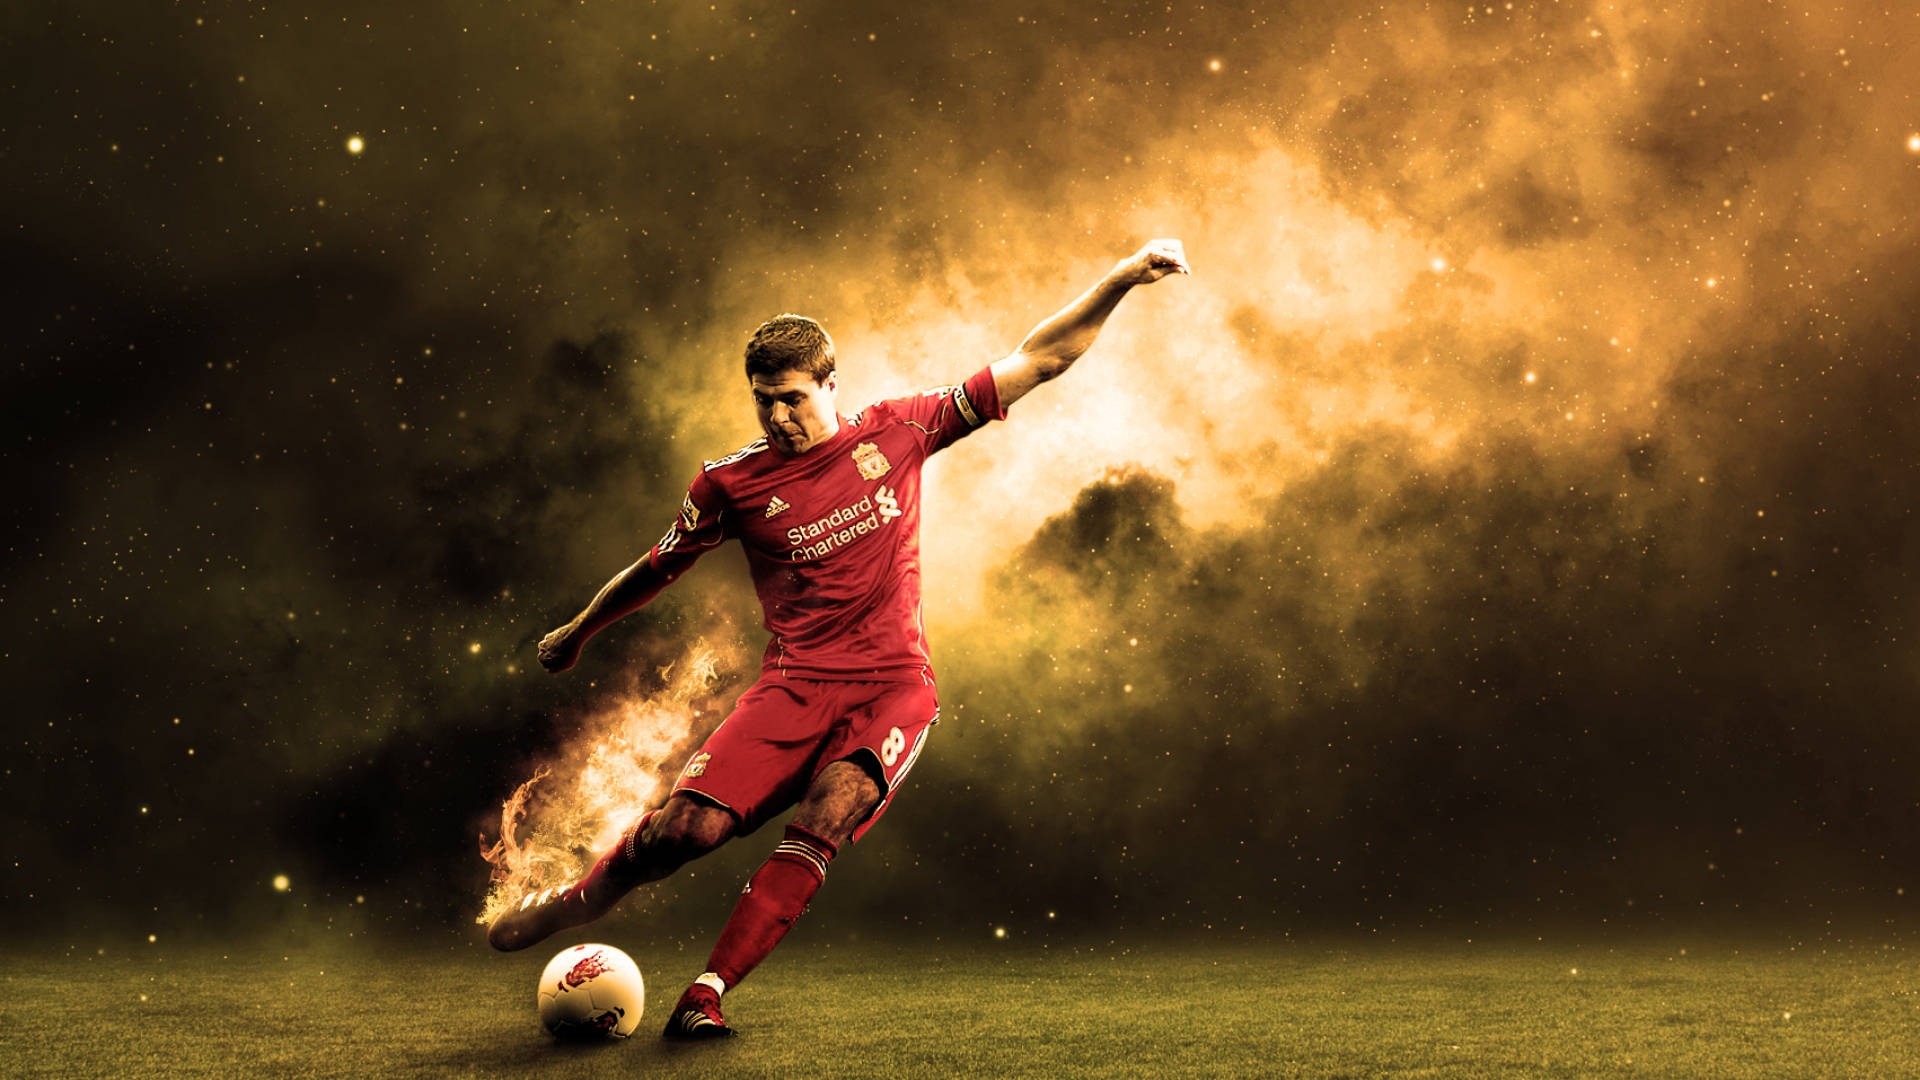 Steven Gerrard Mighty Kick Background